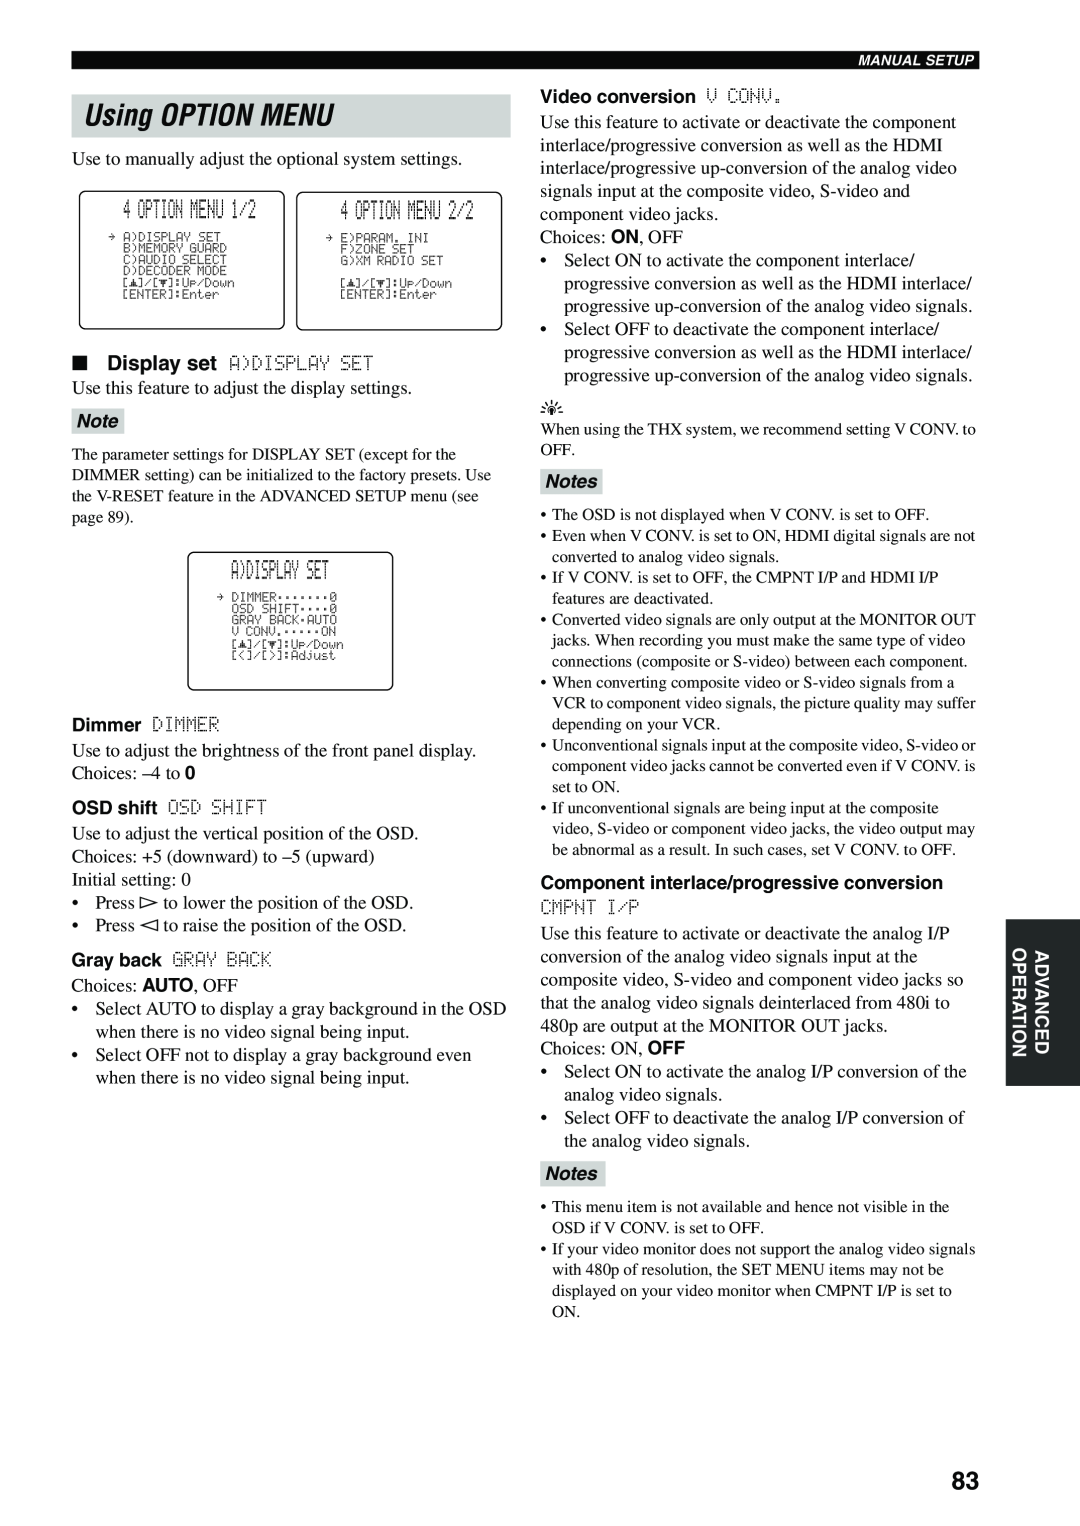 Yamaha HTR-5990 owner manual Using OPTION MENU, Adisplay Set, OPTION MENU 1/2, Notes 